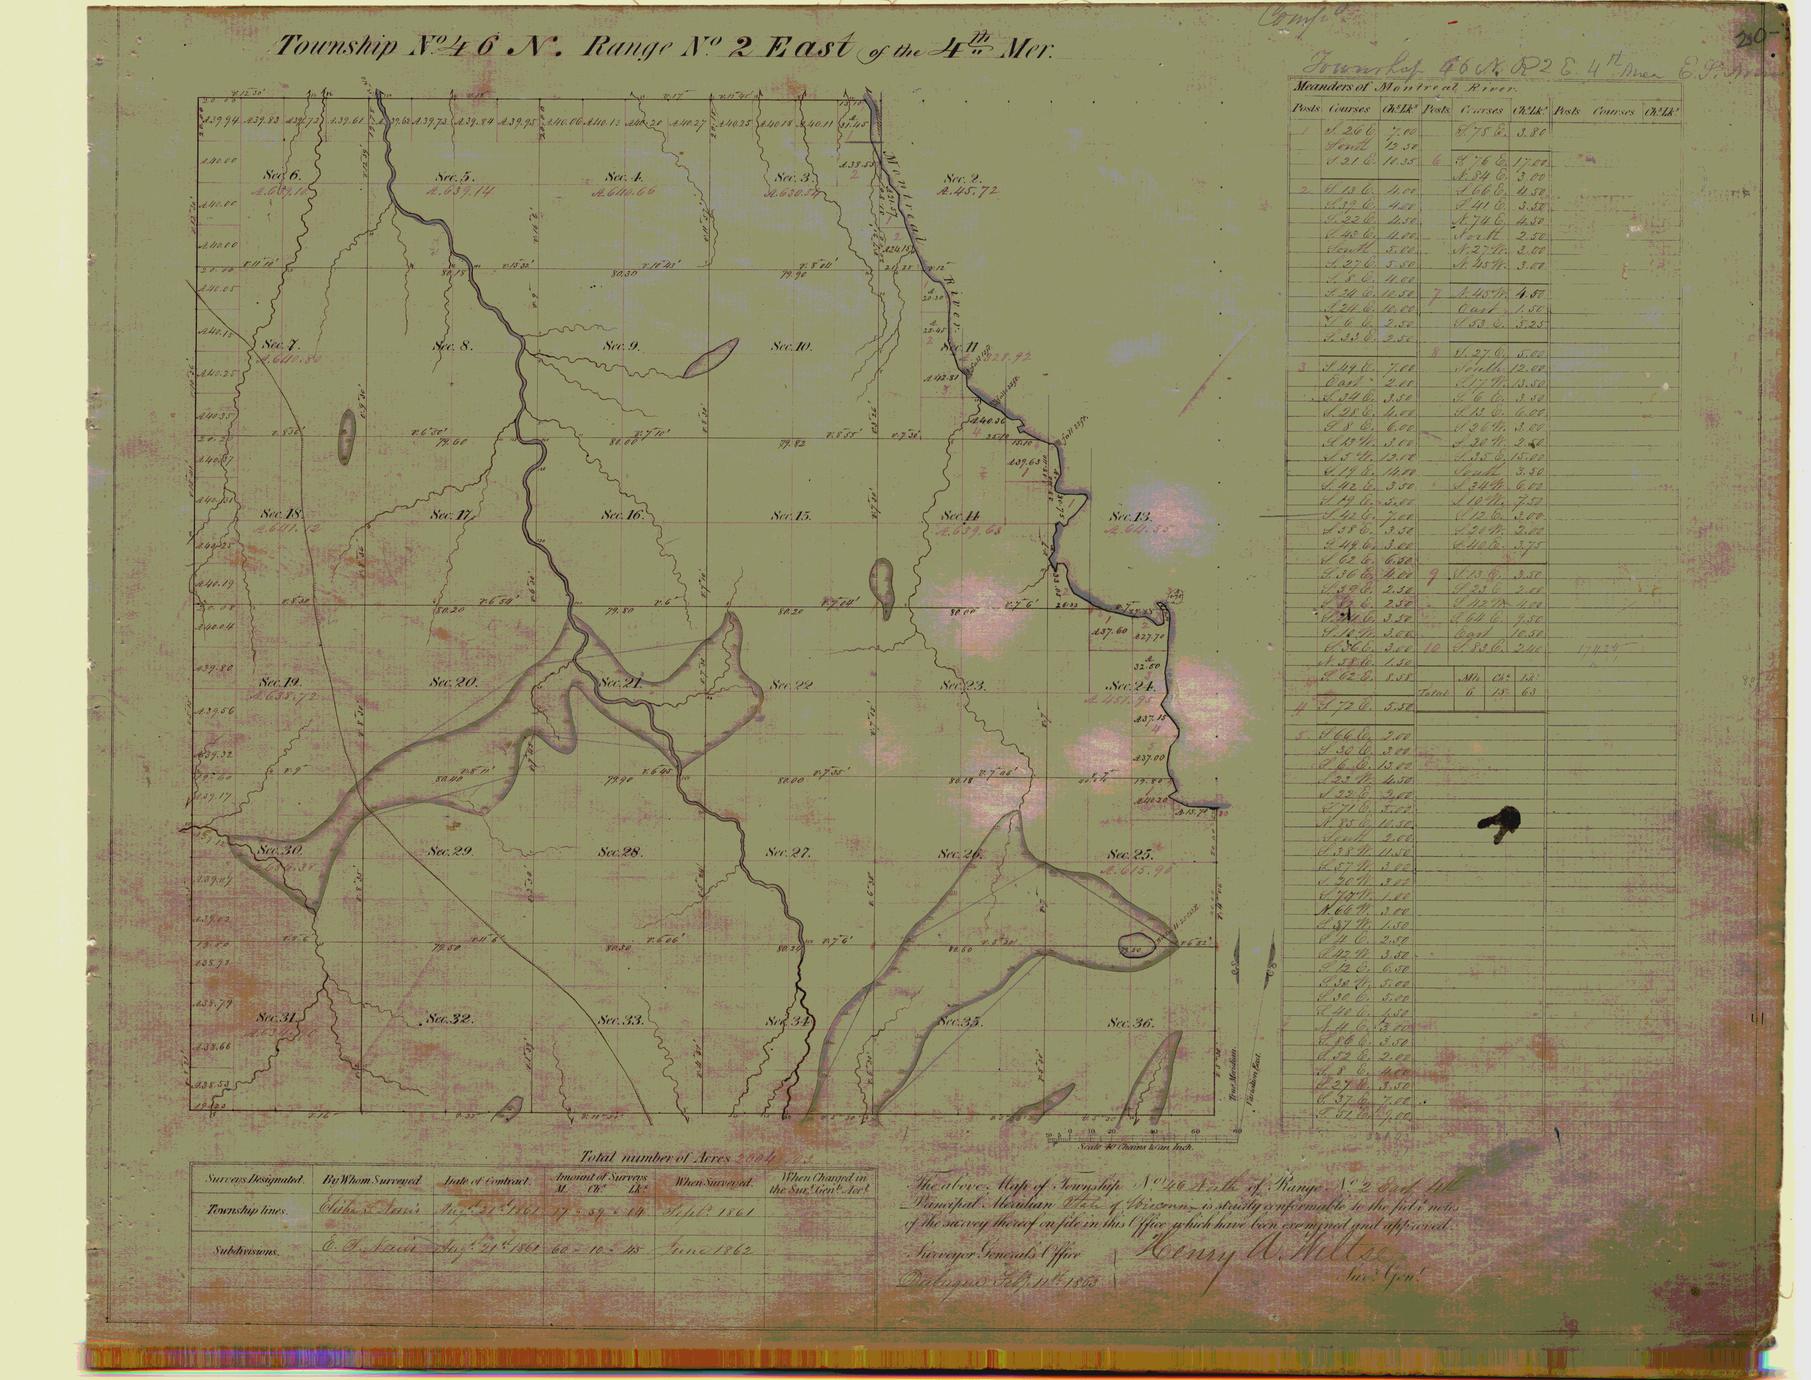 [Public Land Survey System map: Wisconsin Township 46 North, Range 02 East]